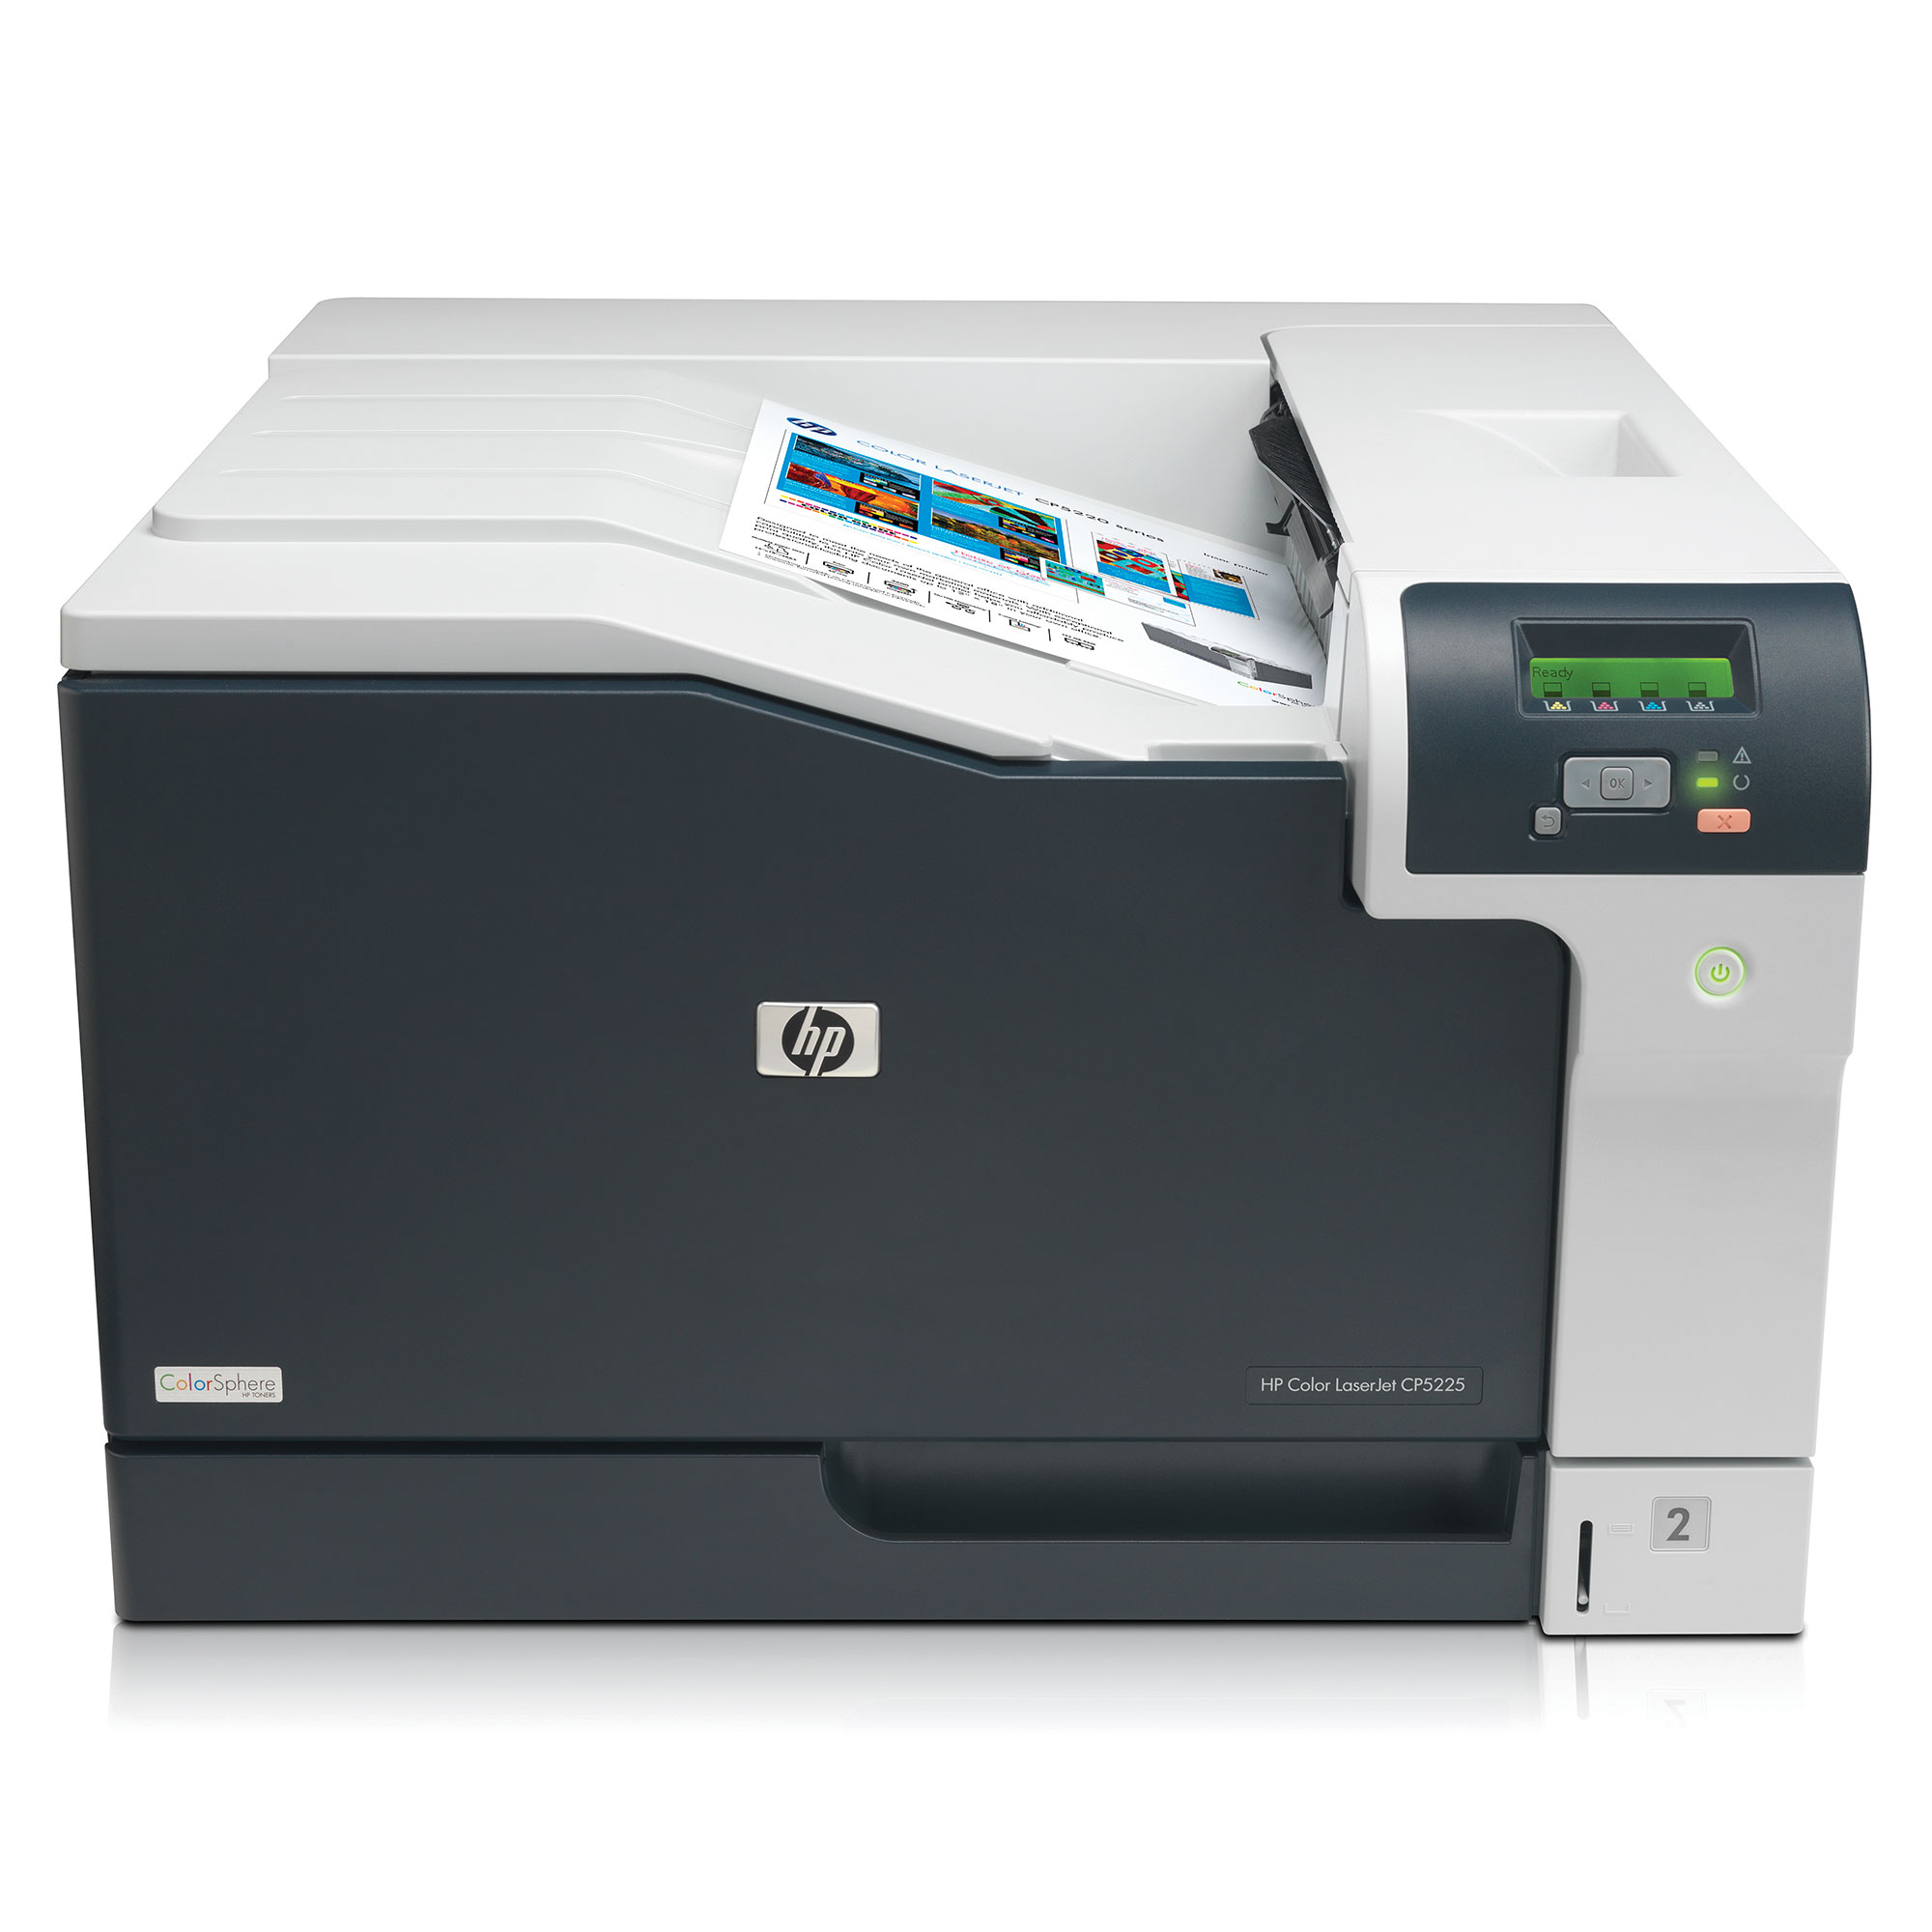 HP Color Professional CP5225n - printer - color - CE711A#BGJ | howardcomputers.com